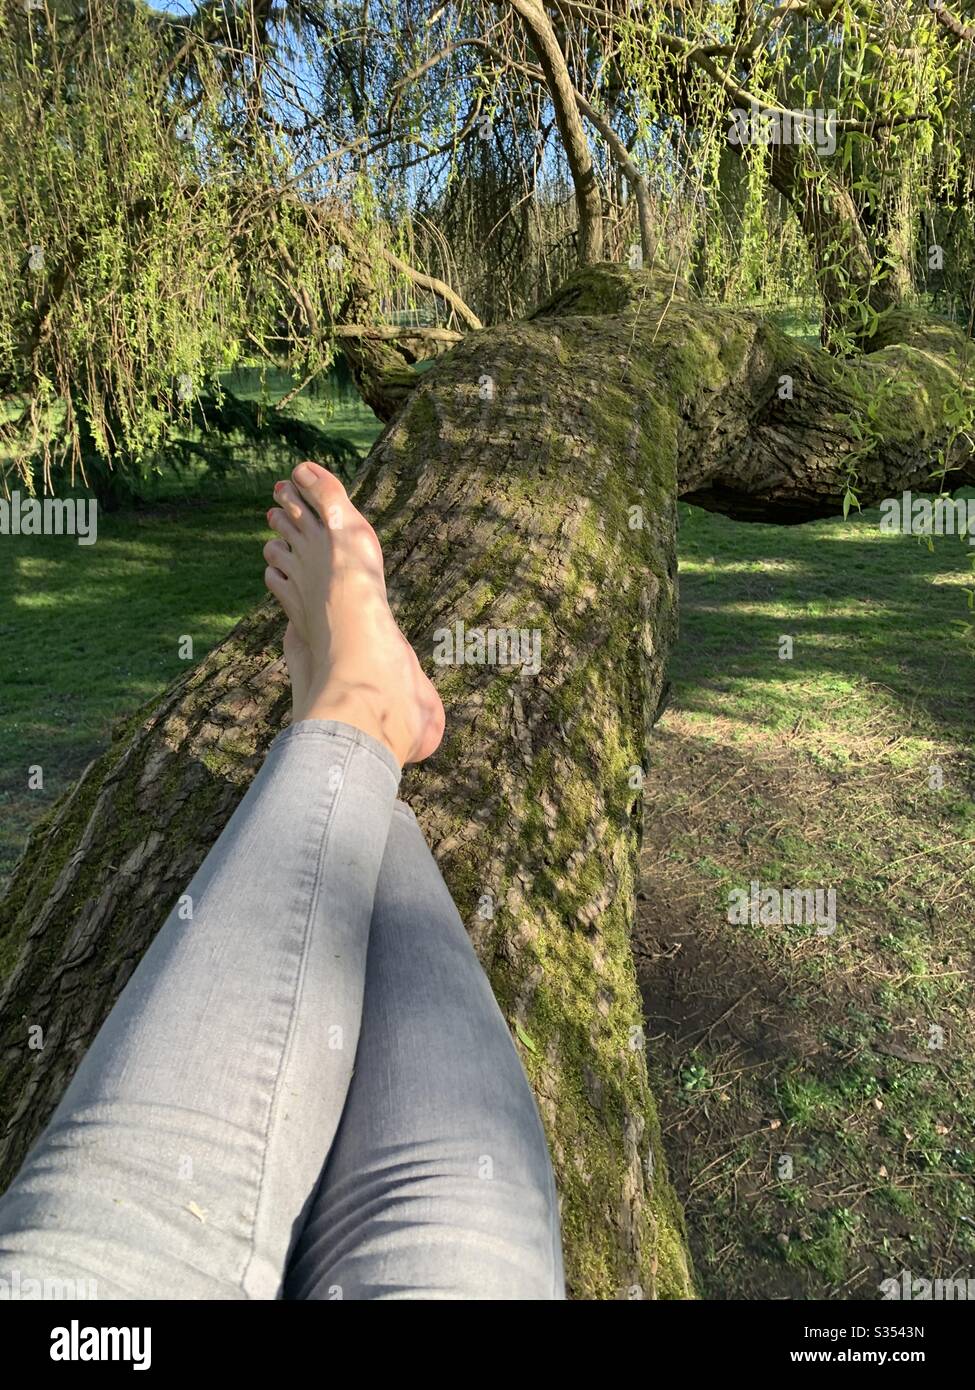 Resting up a tree pov Stock Photo